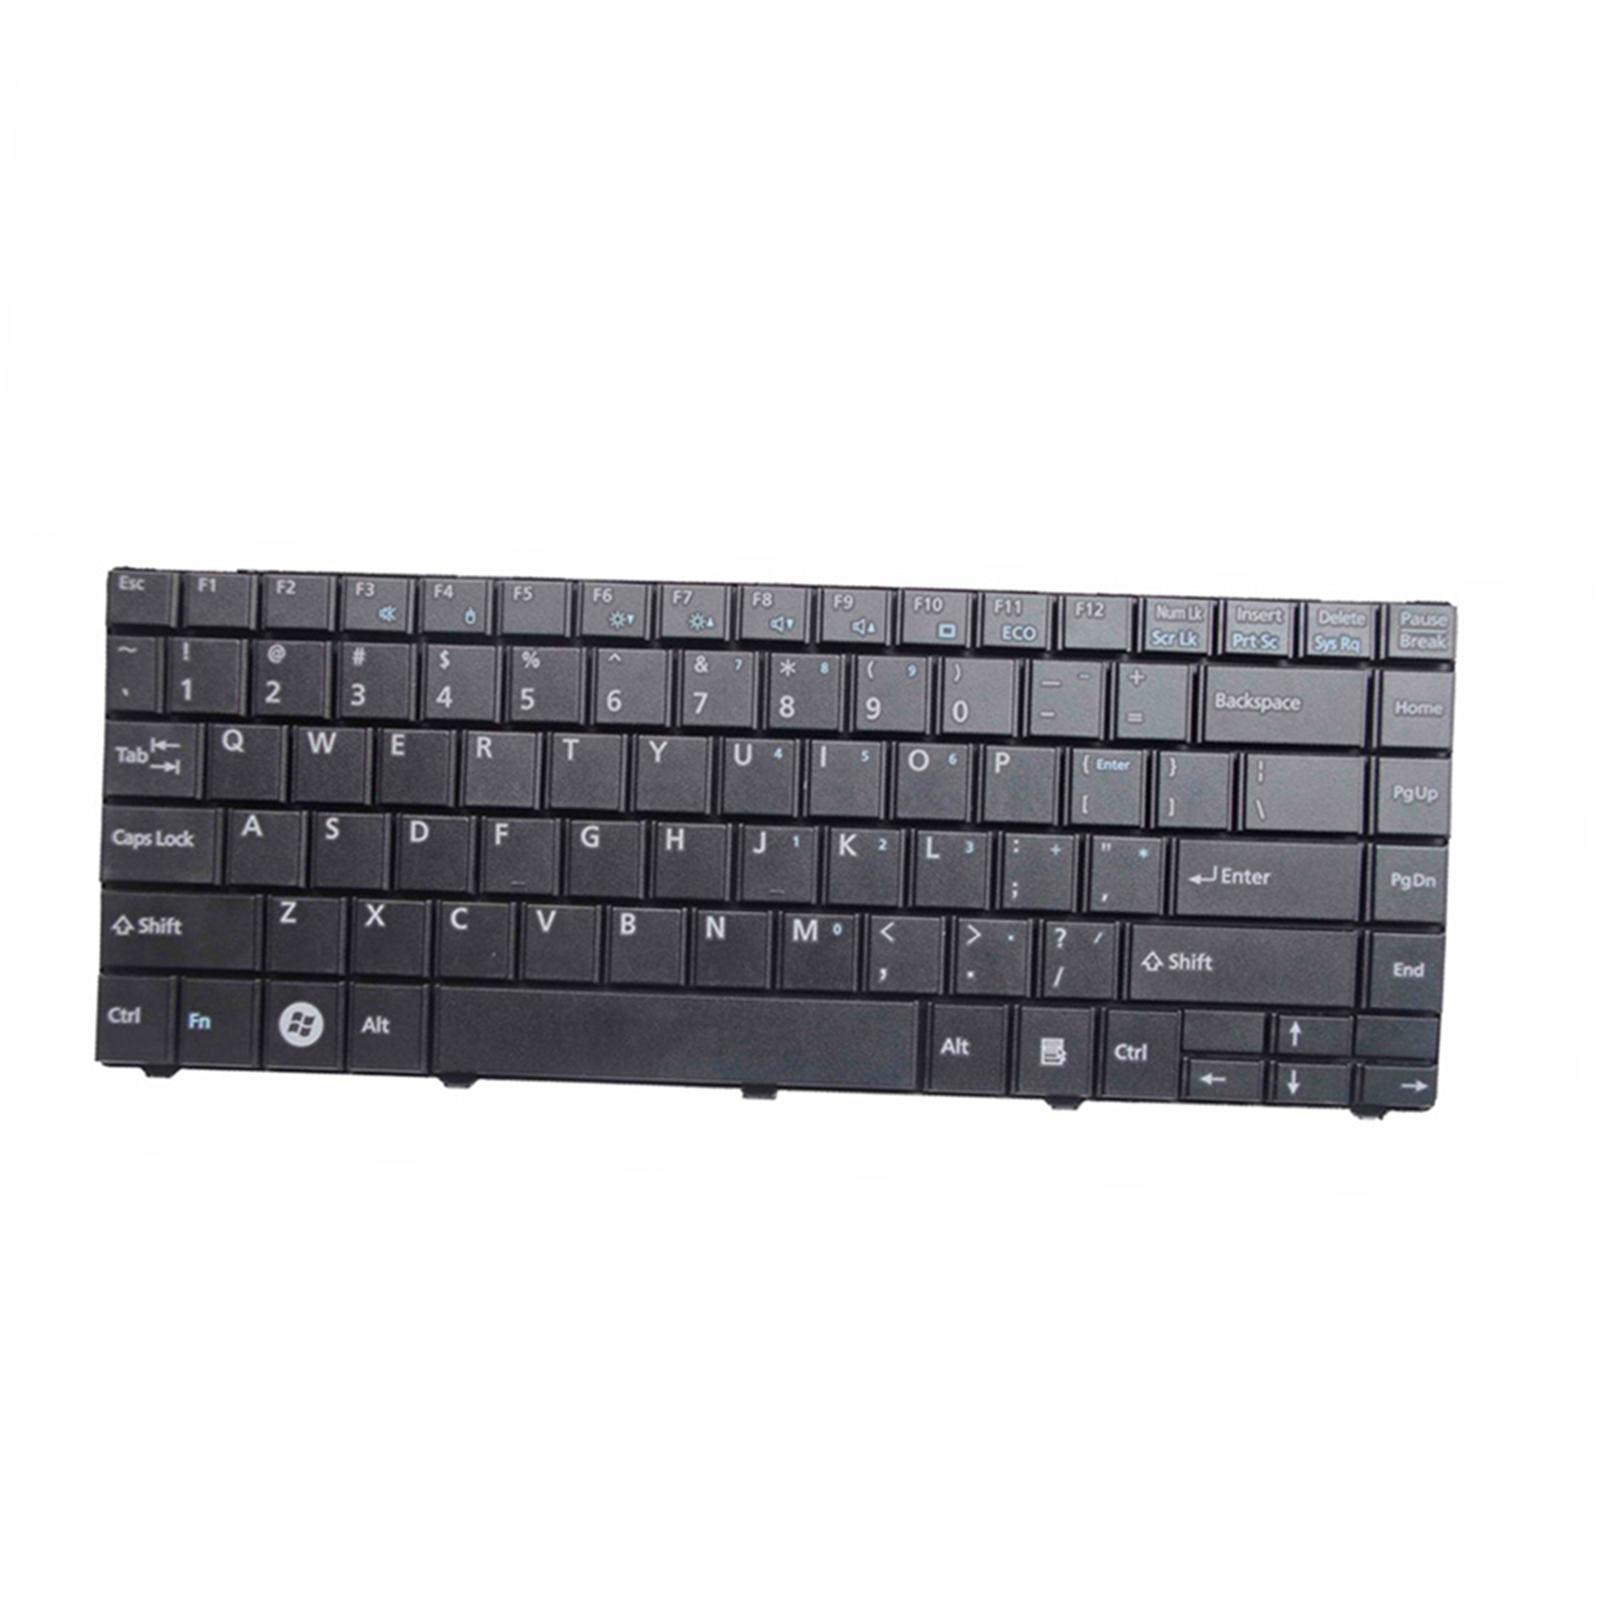 Black Keyboard Compact for Fujitsu Lifebook LH531 BH531 LH701 Acc US Layout